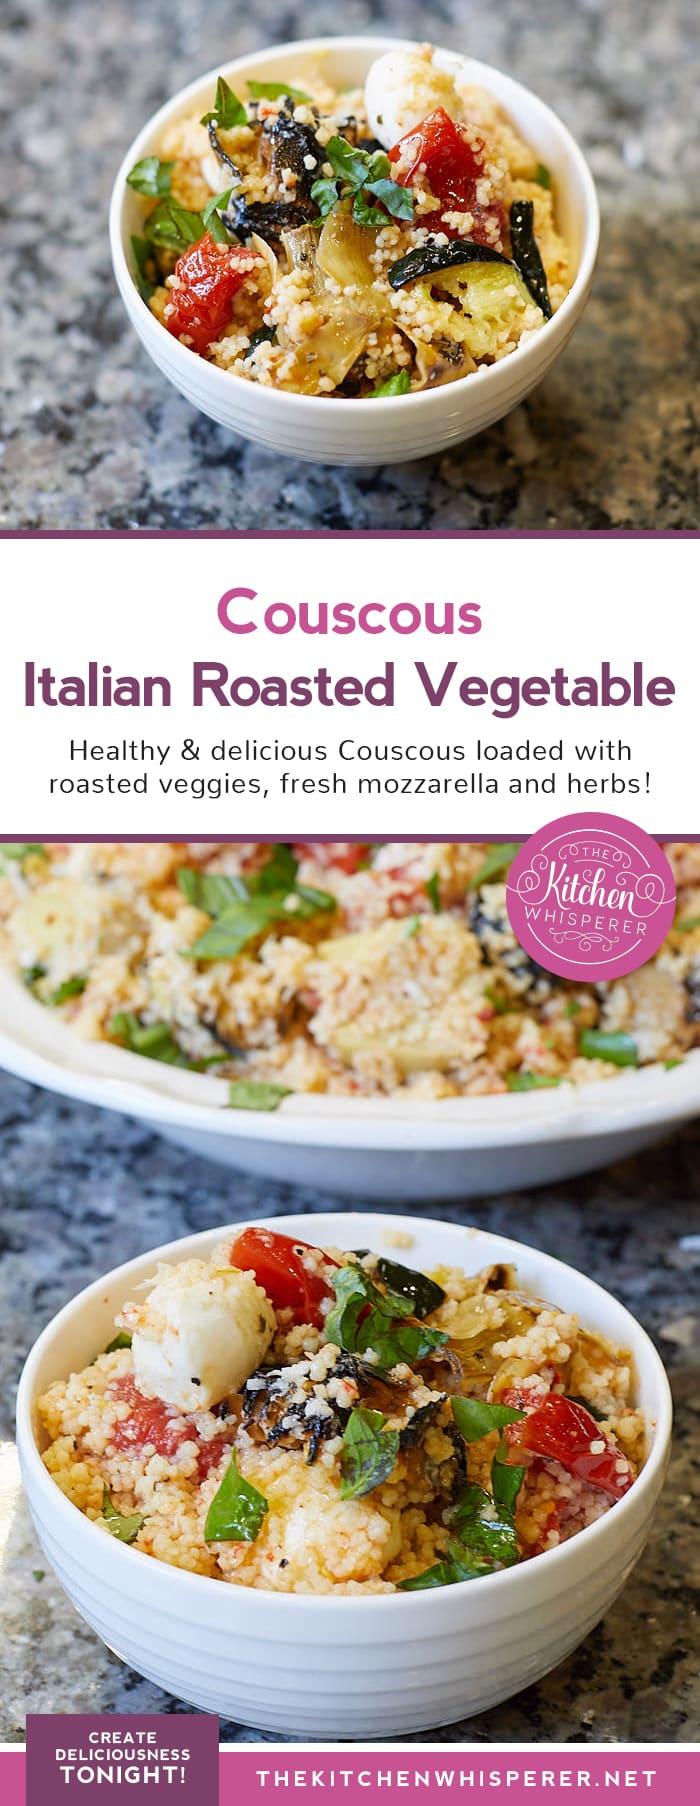 Italian Roasted Vegetable Couscous